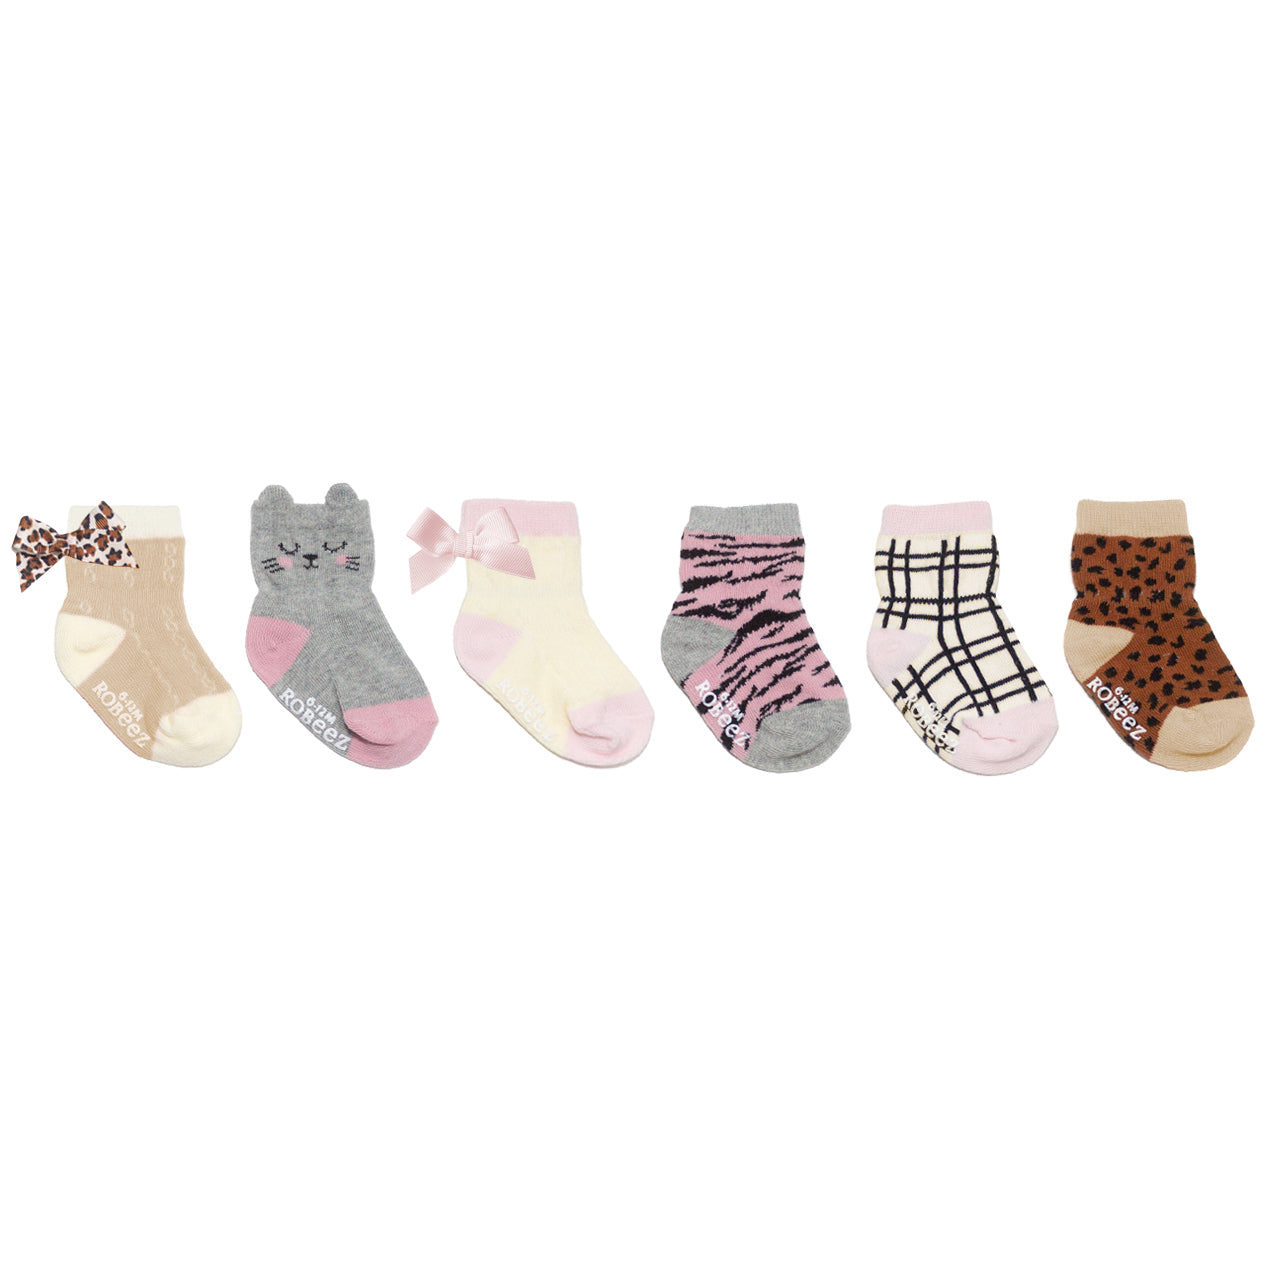 Robeez Infant Crew Socks 6-Pack / Girl - Purr-fect Kitty - Suite Child